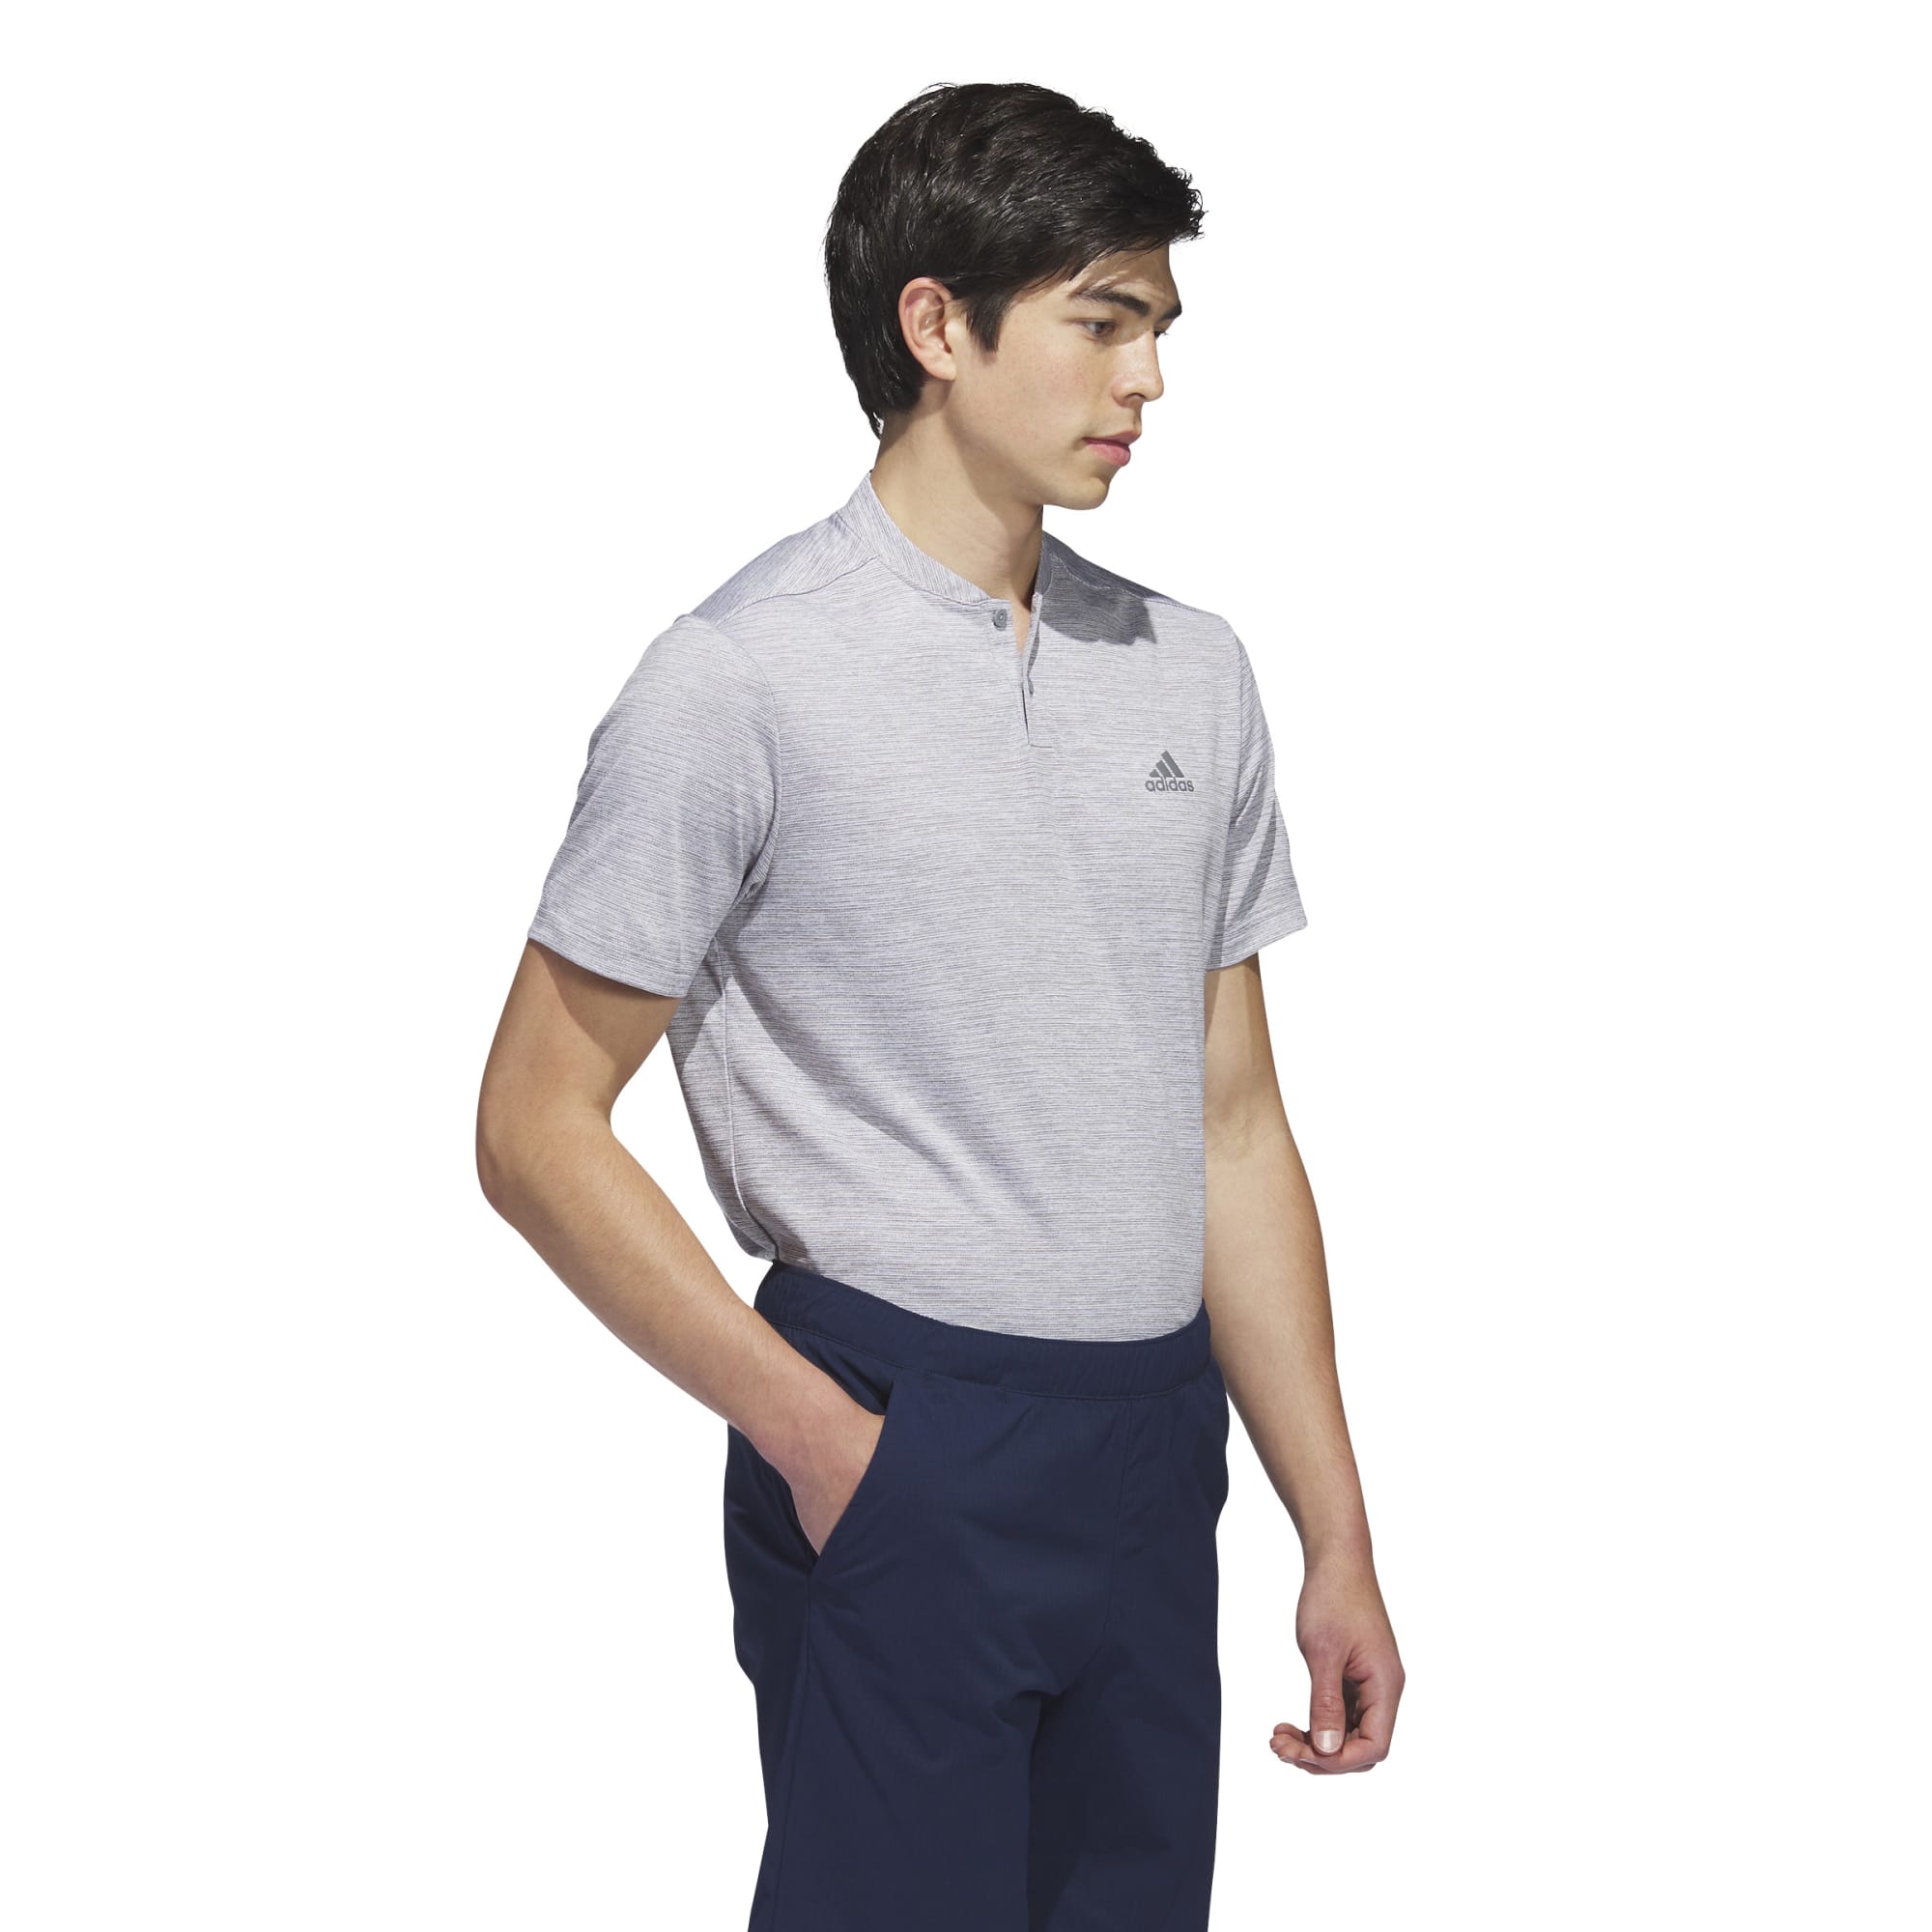 adidas Golf Textured Stripe Mens Polo Shirt 